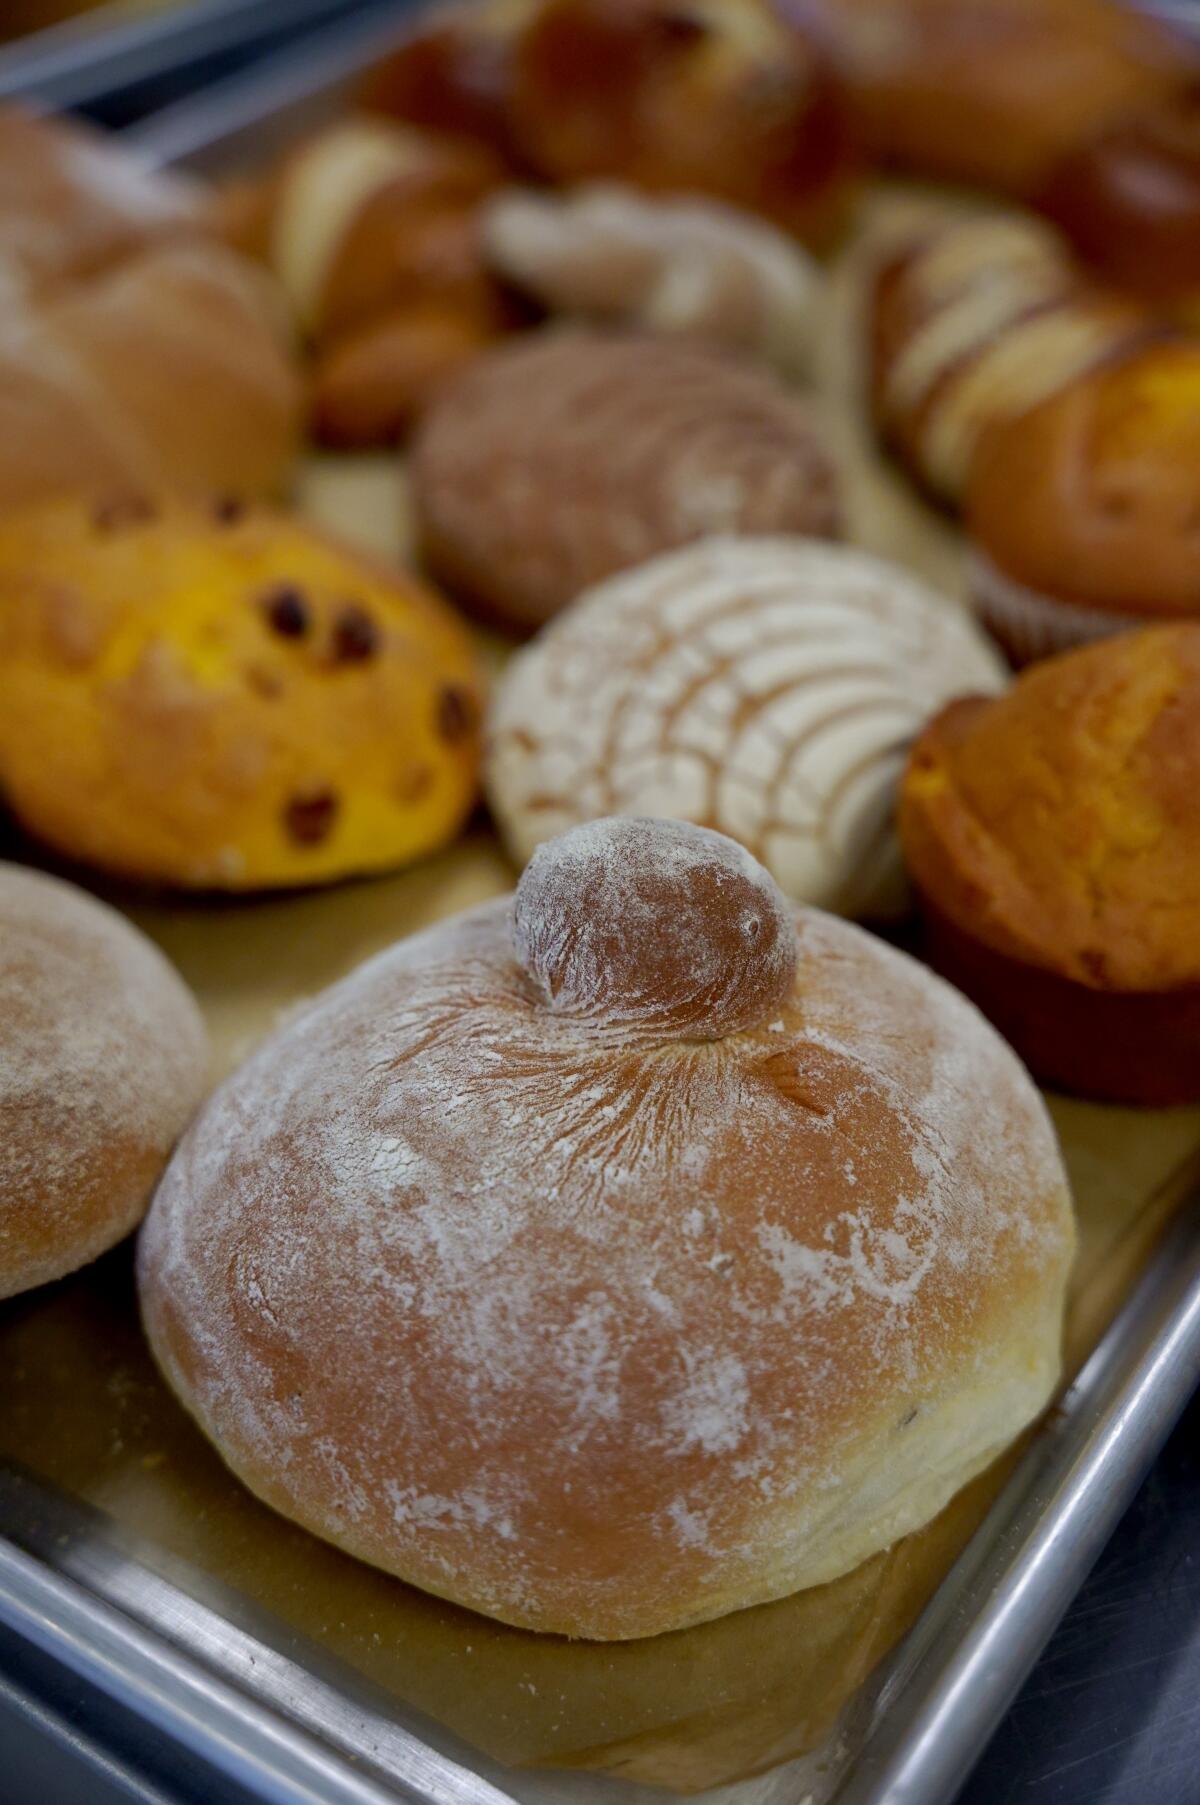 GuatePan Bakery produce coronas, cubiletes, conchas, gusanos, pan francés, cuernitos, pan de trigo y shecas.